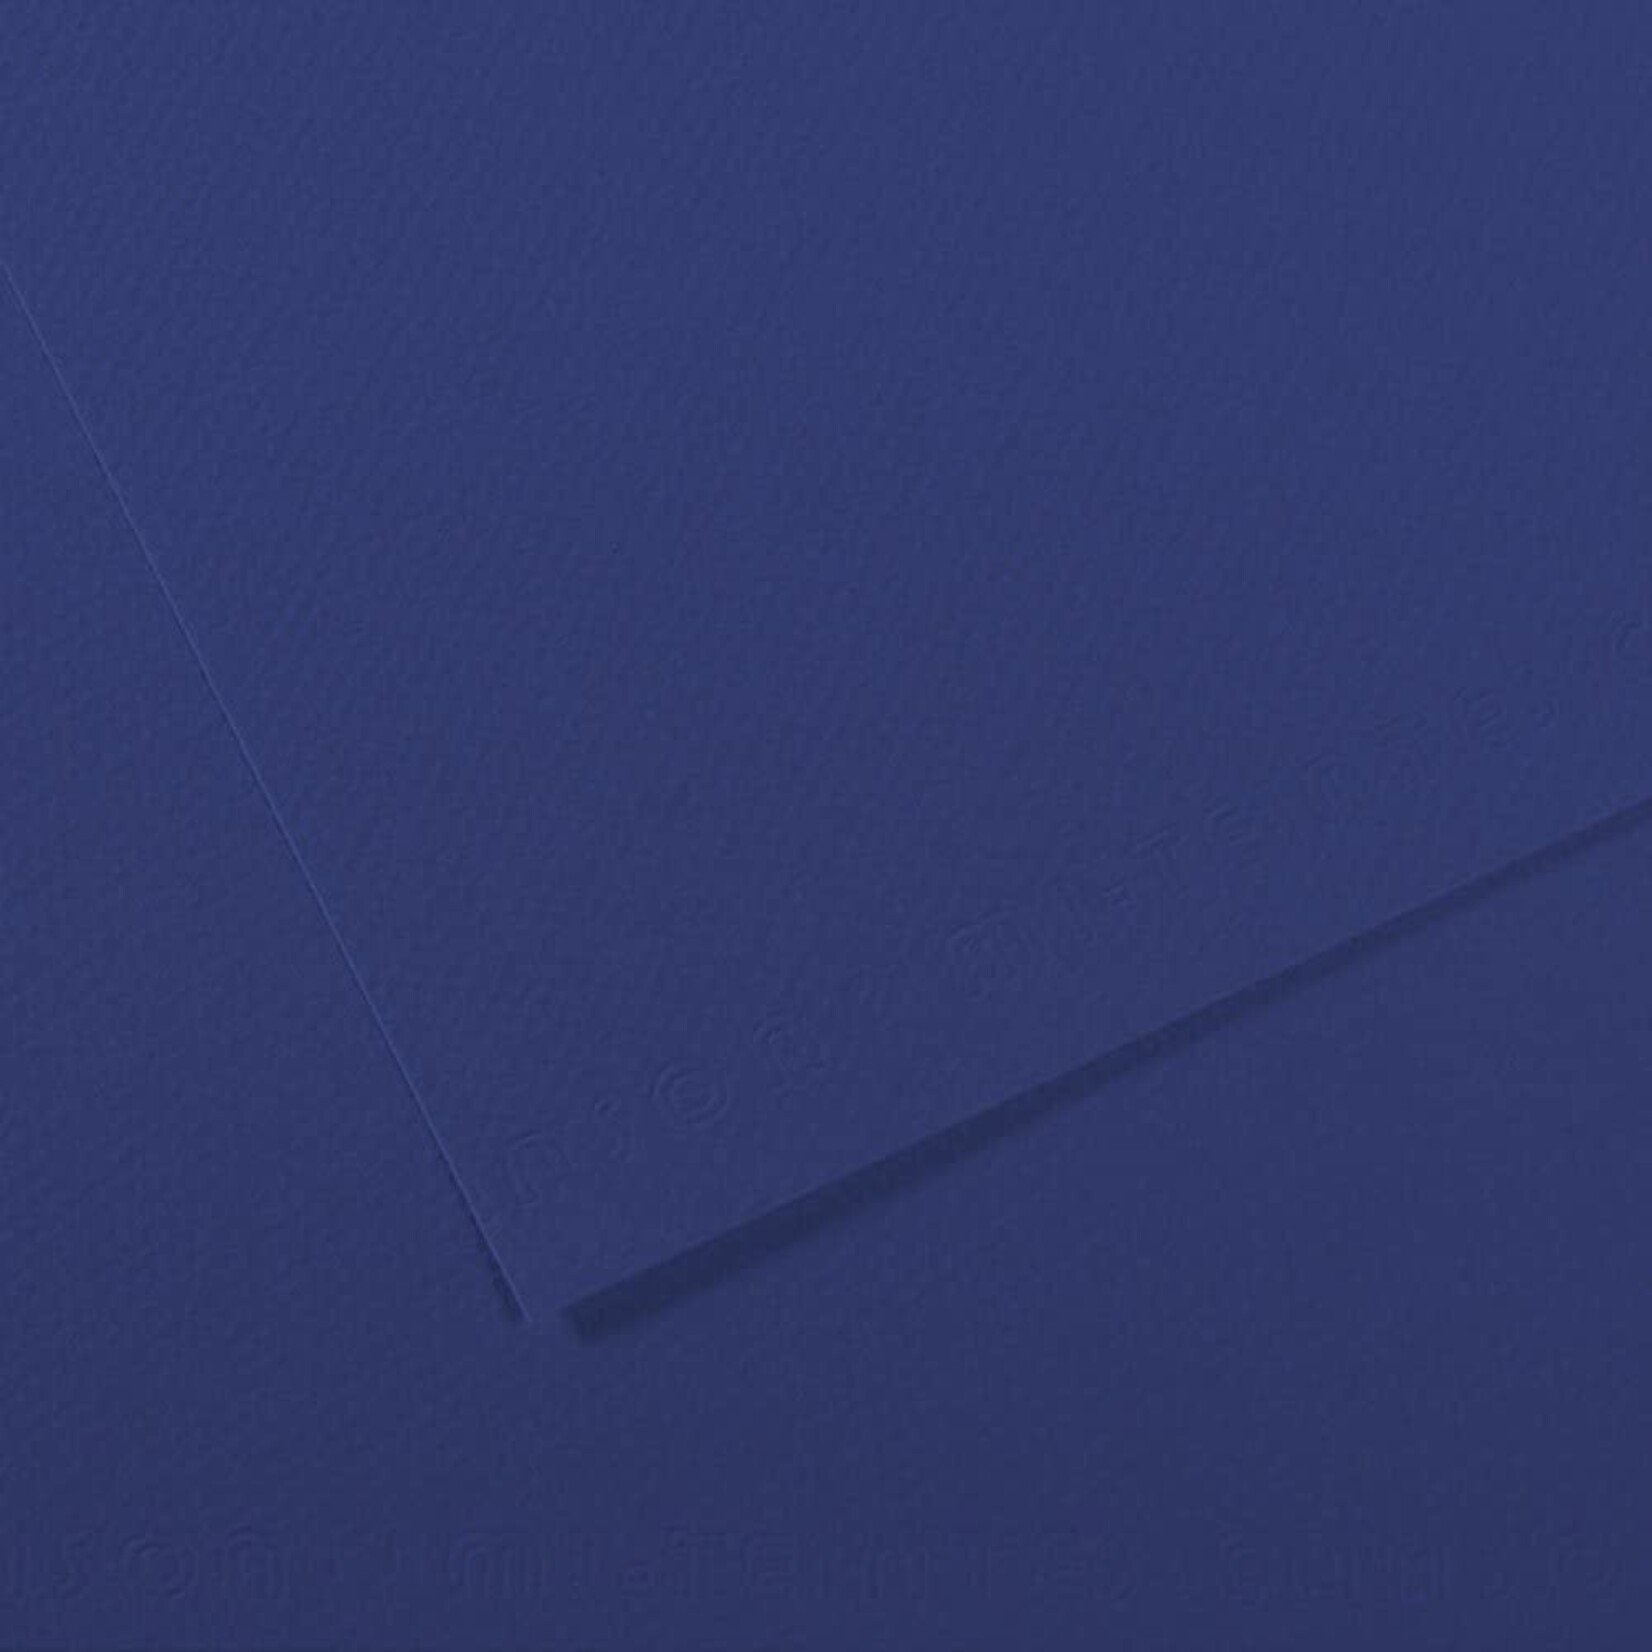 Canson Mi-Teintes Paper Sheets, 8-1/2'' x 11'', Royal Blue